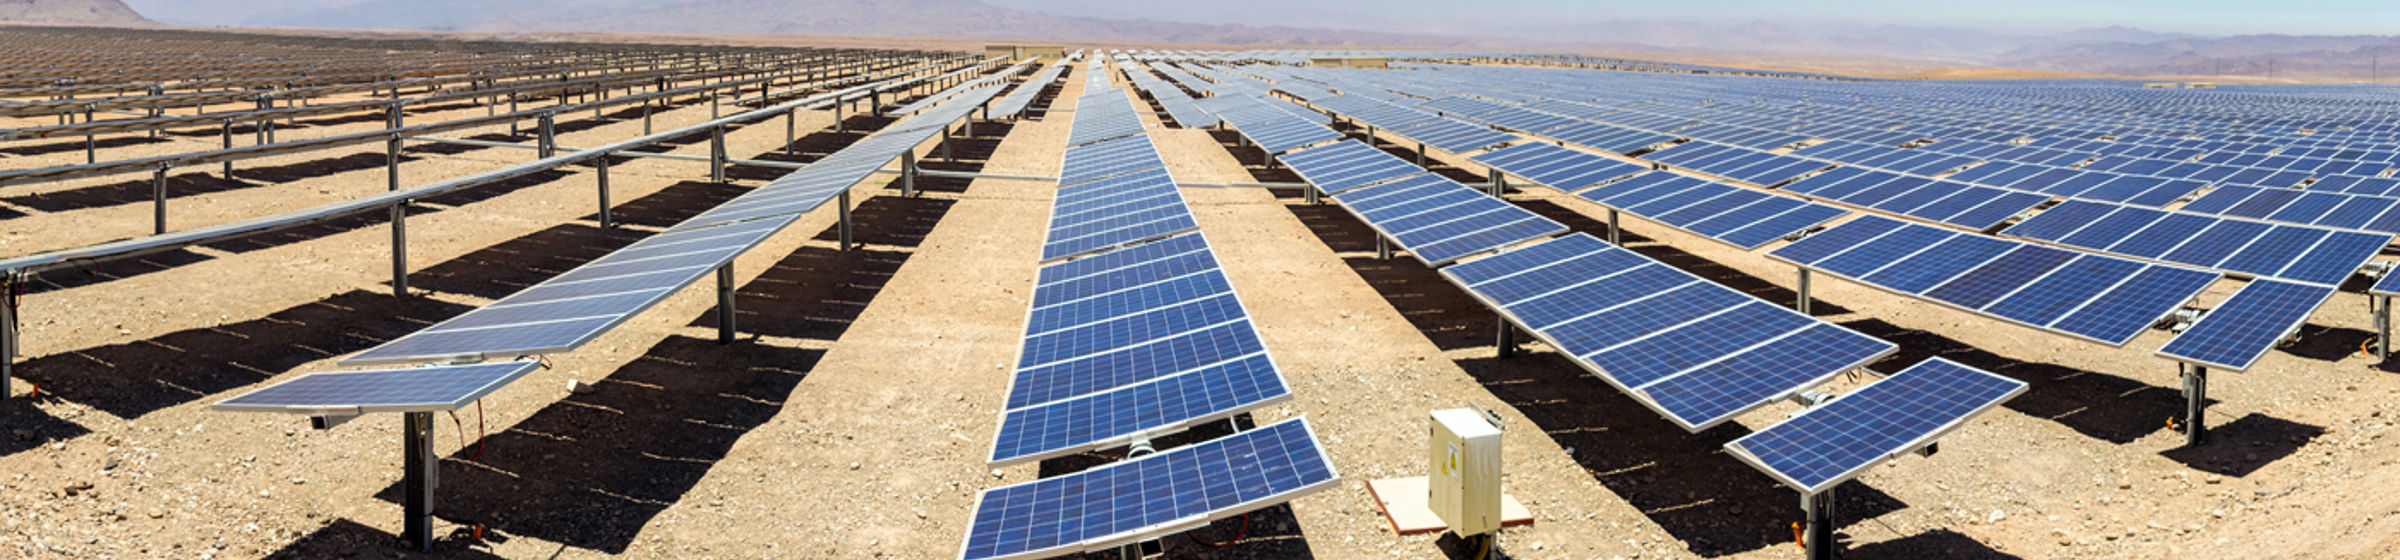 Solcellepaneler i Atacama-ørkenen